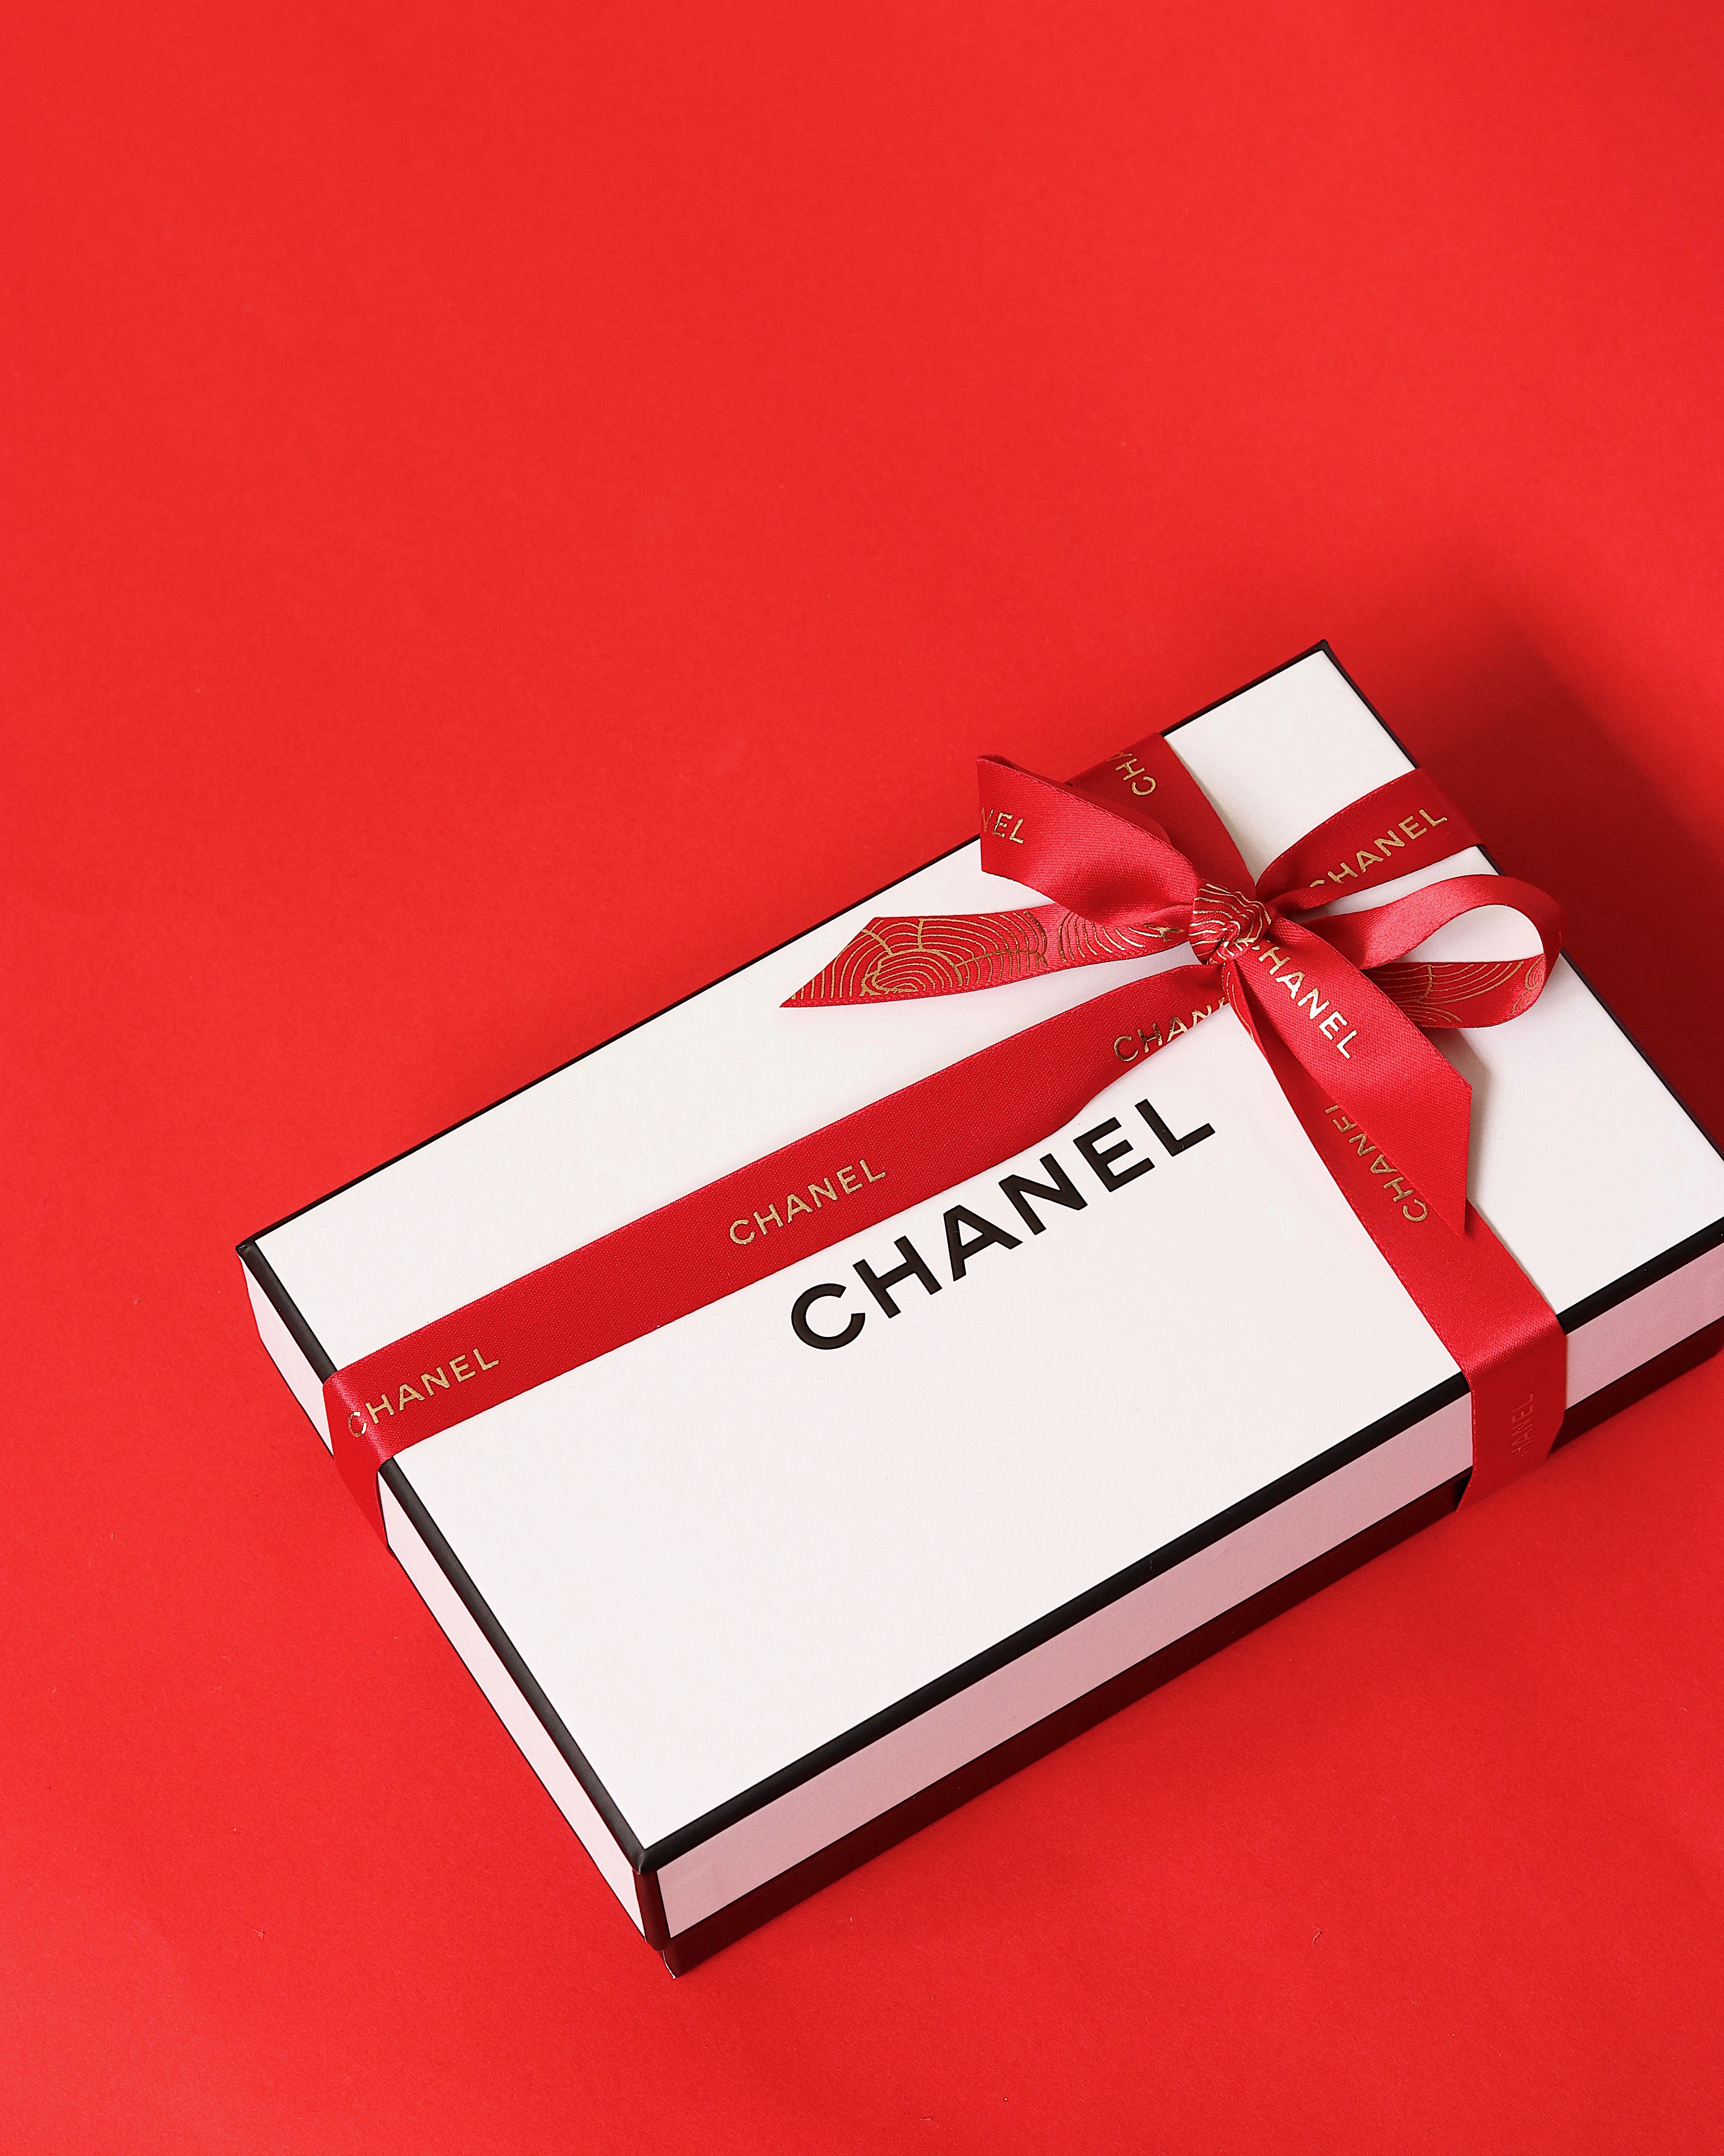 Chanel Valentine's Day VIP event haul